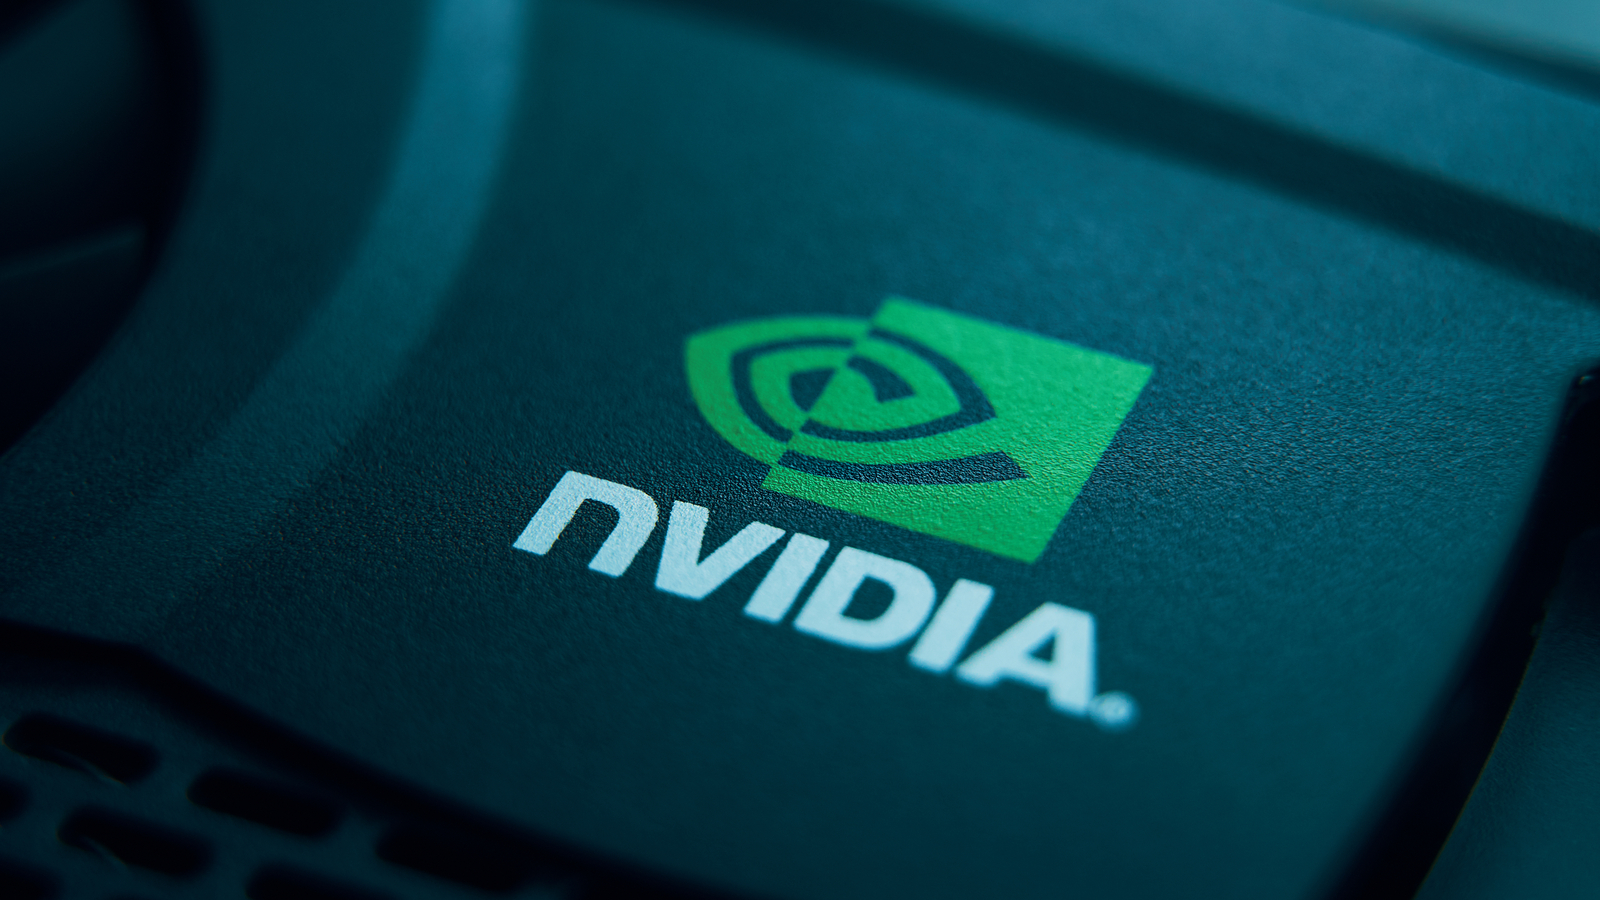 The Nvidia (NVDA Stock) logo on a graphics card.